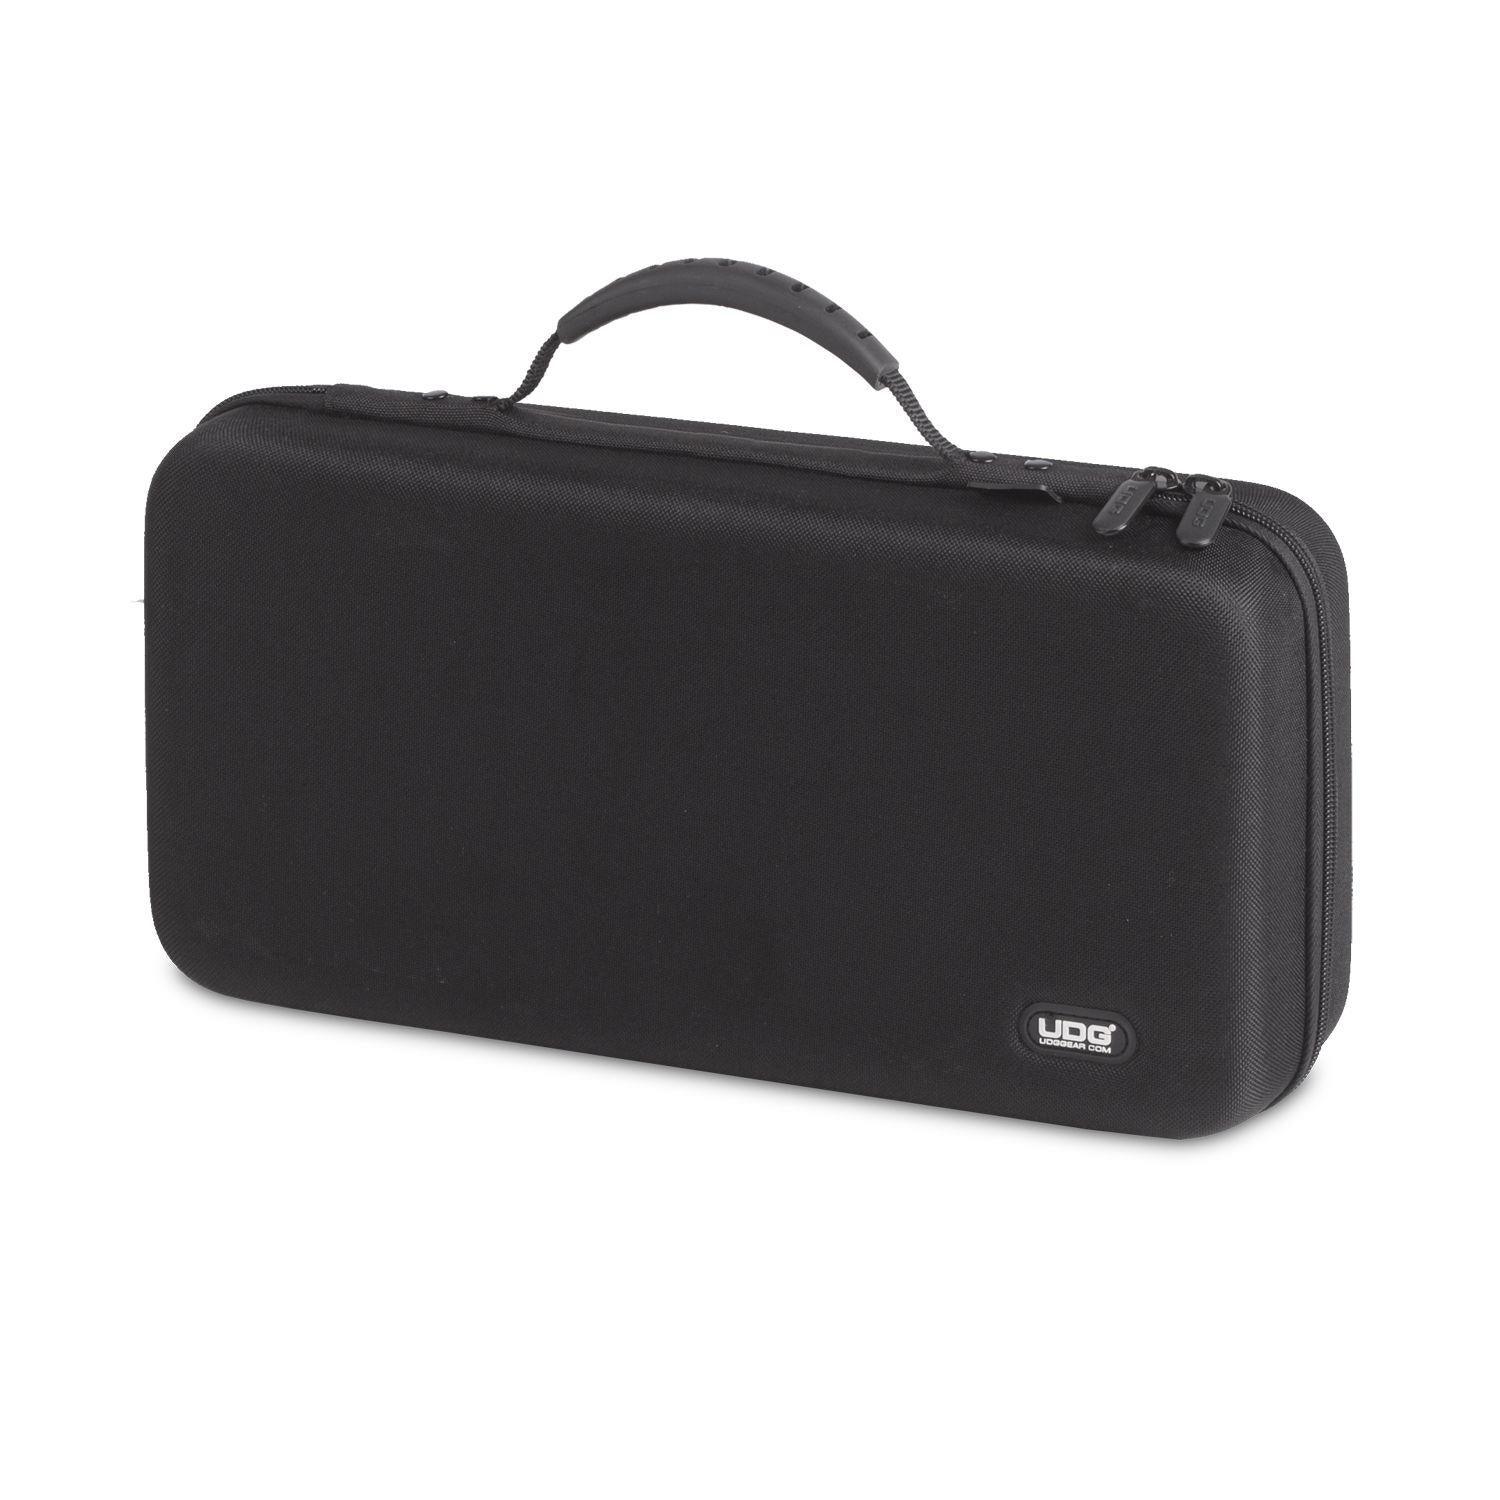 UDG Creator Pioneer RMX-1000 Hardcase Black MK2 - DY Pro Audio